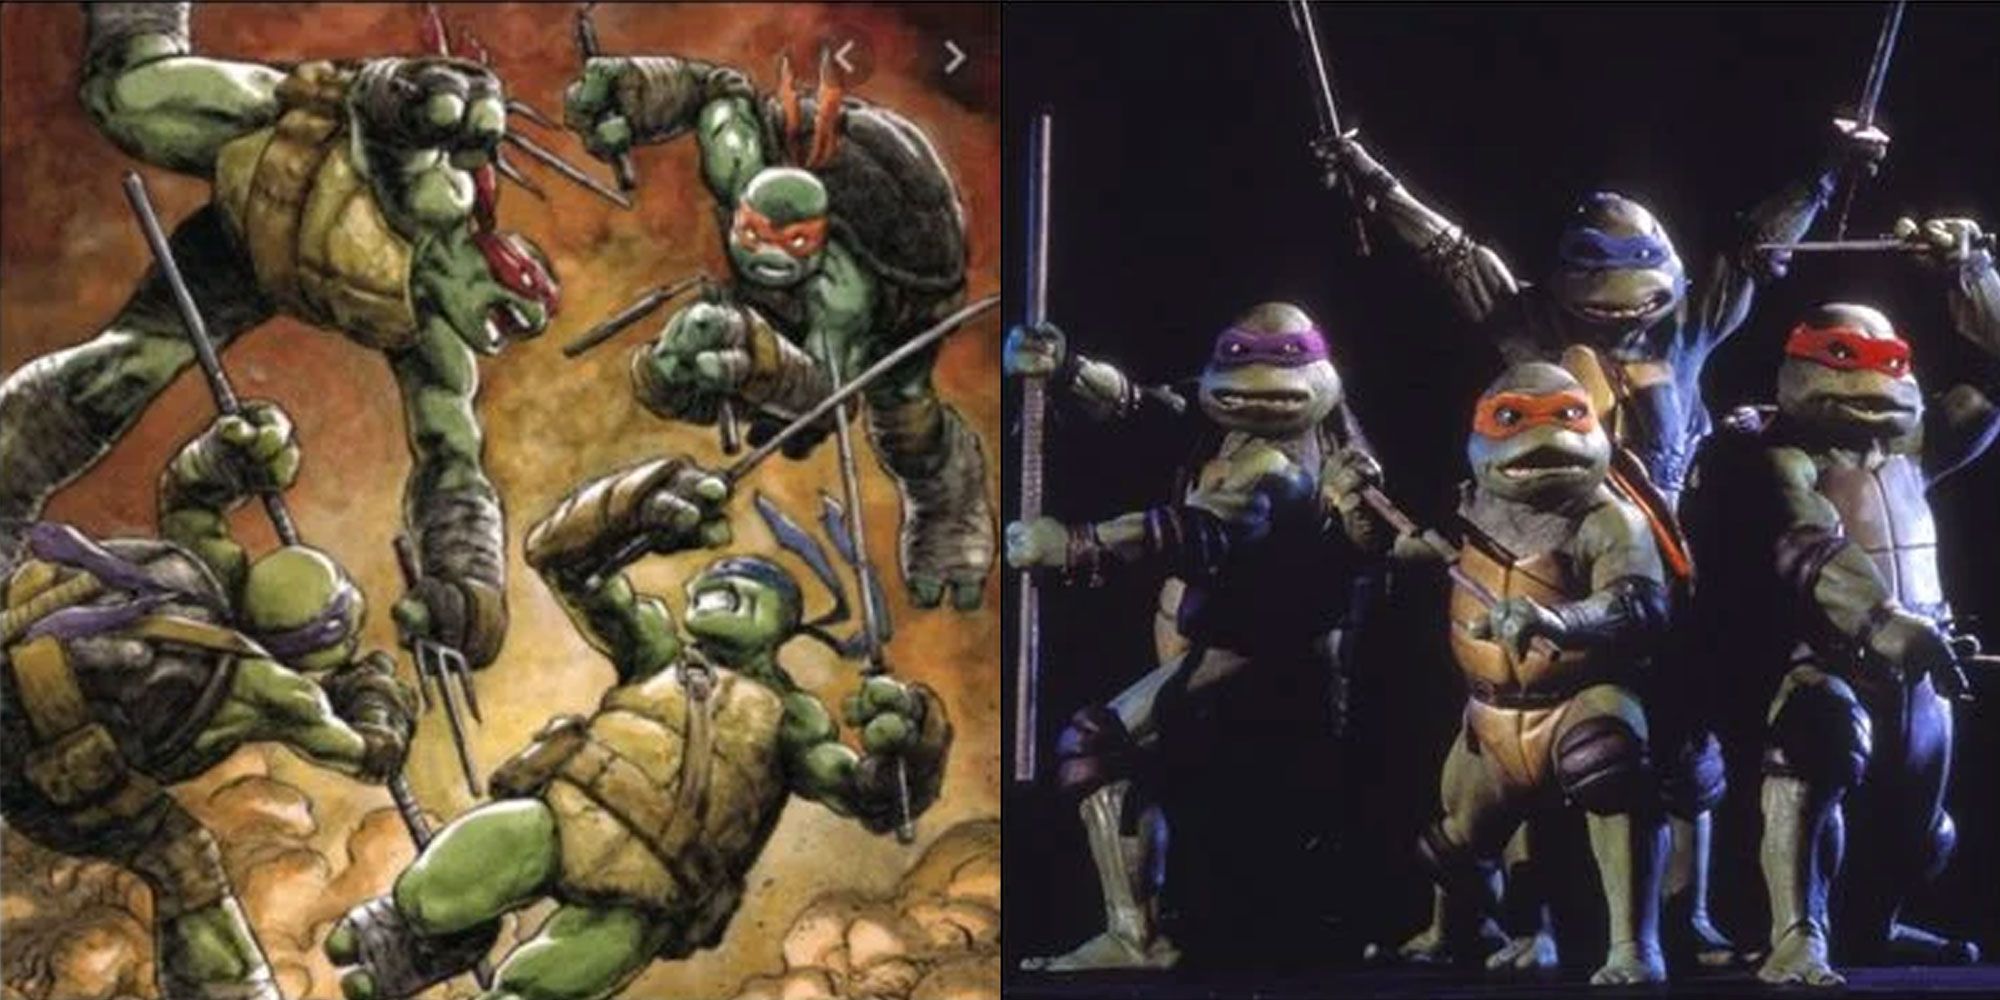 A split image features comic book Teenage Mutant Ninja Turtles alongside the original live action movie depiction